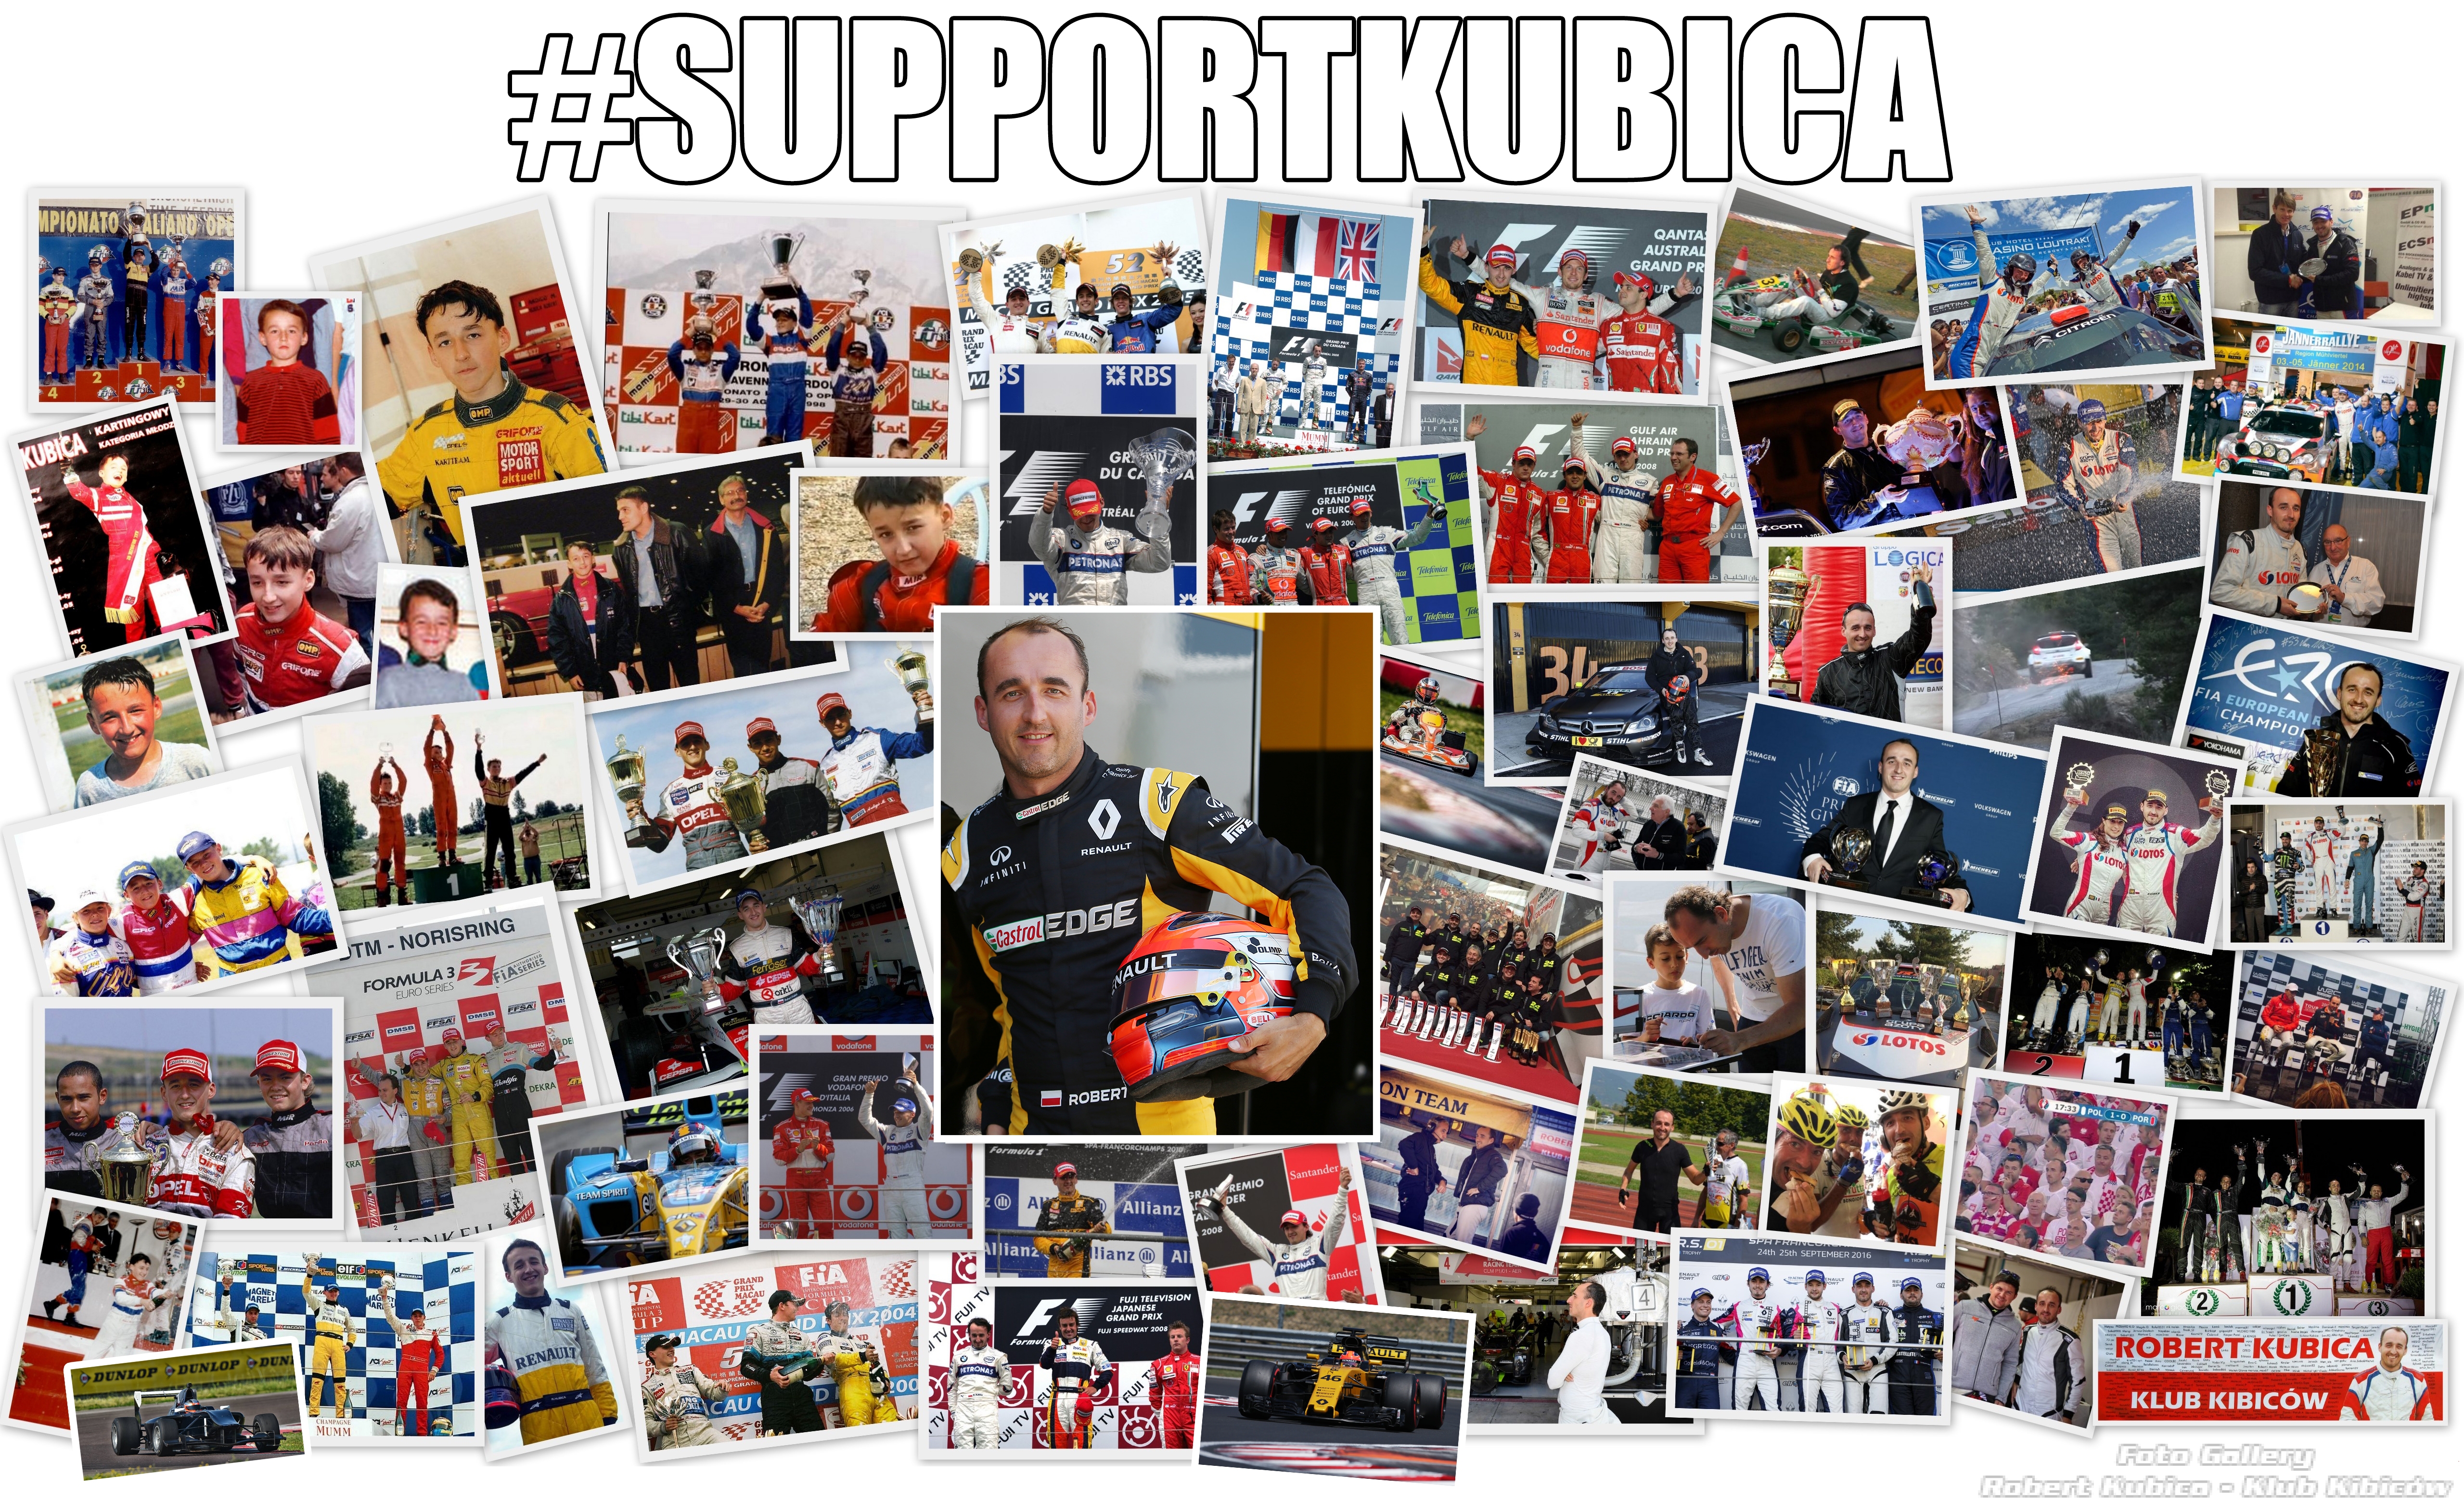 SupportKubica - Robert Kubica Klub Kibiców